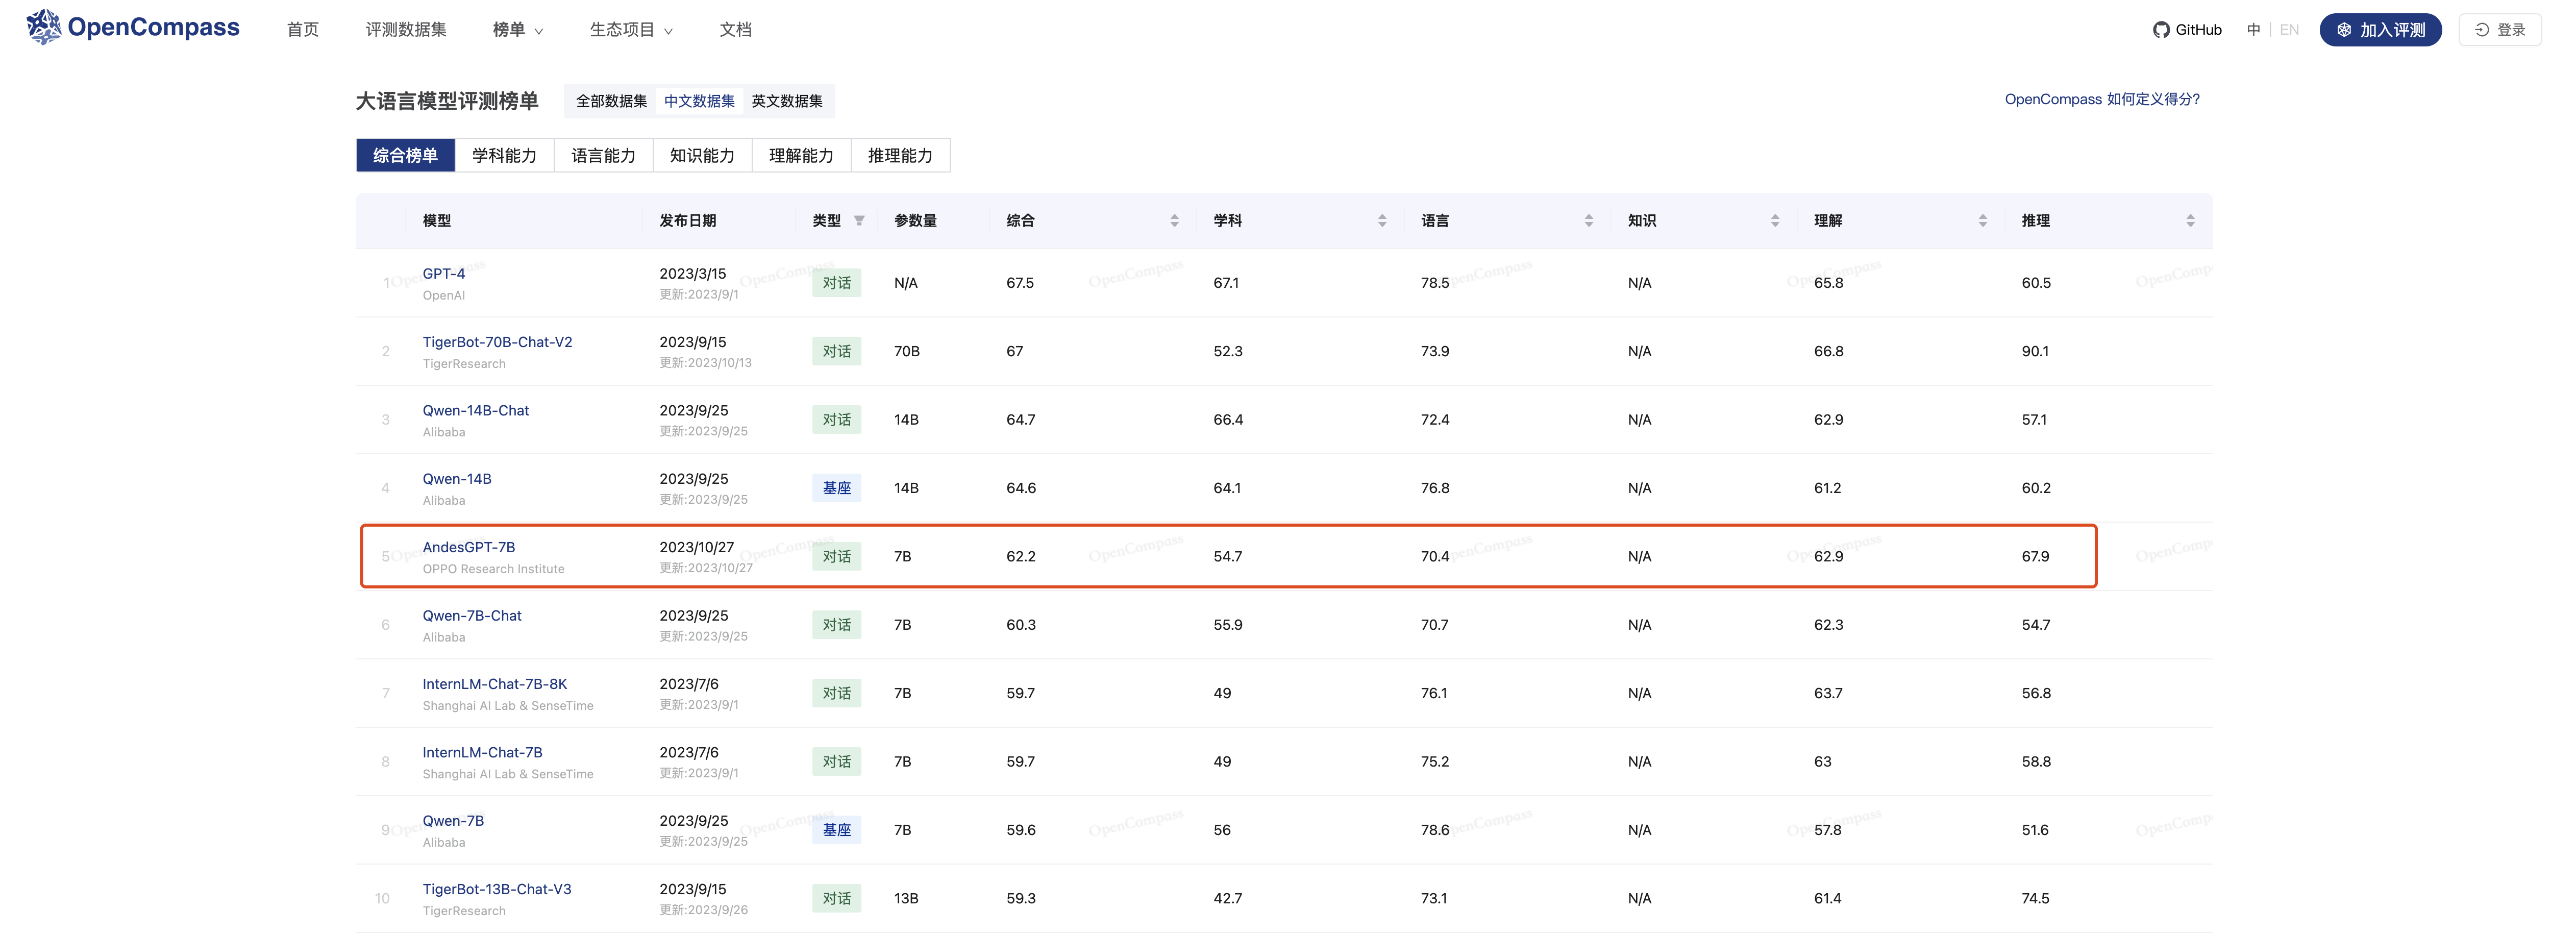 (OpenCompass大说念话模子评测榜单-华文数据集 2023/10/30)